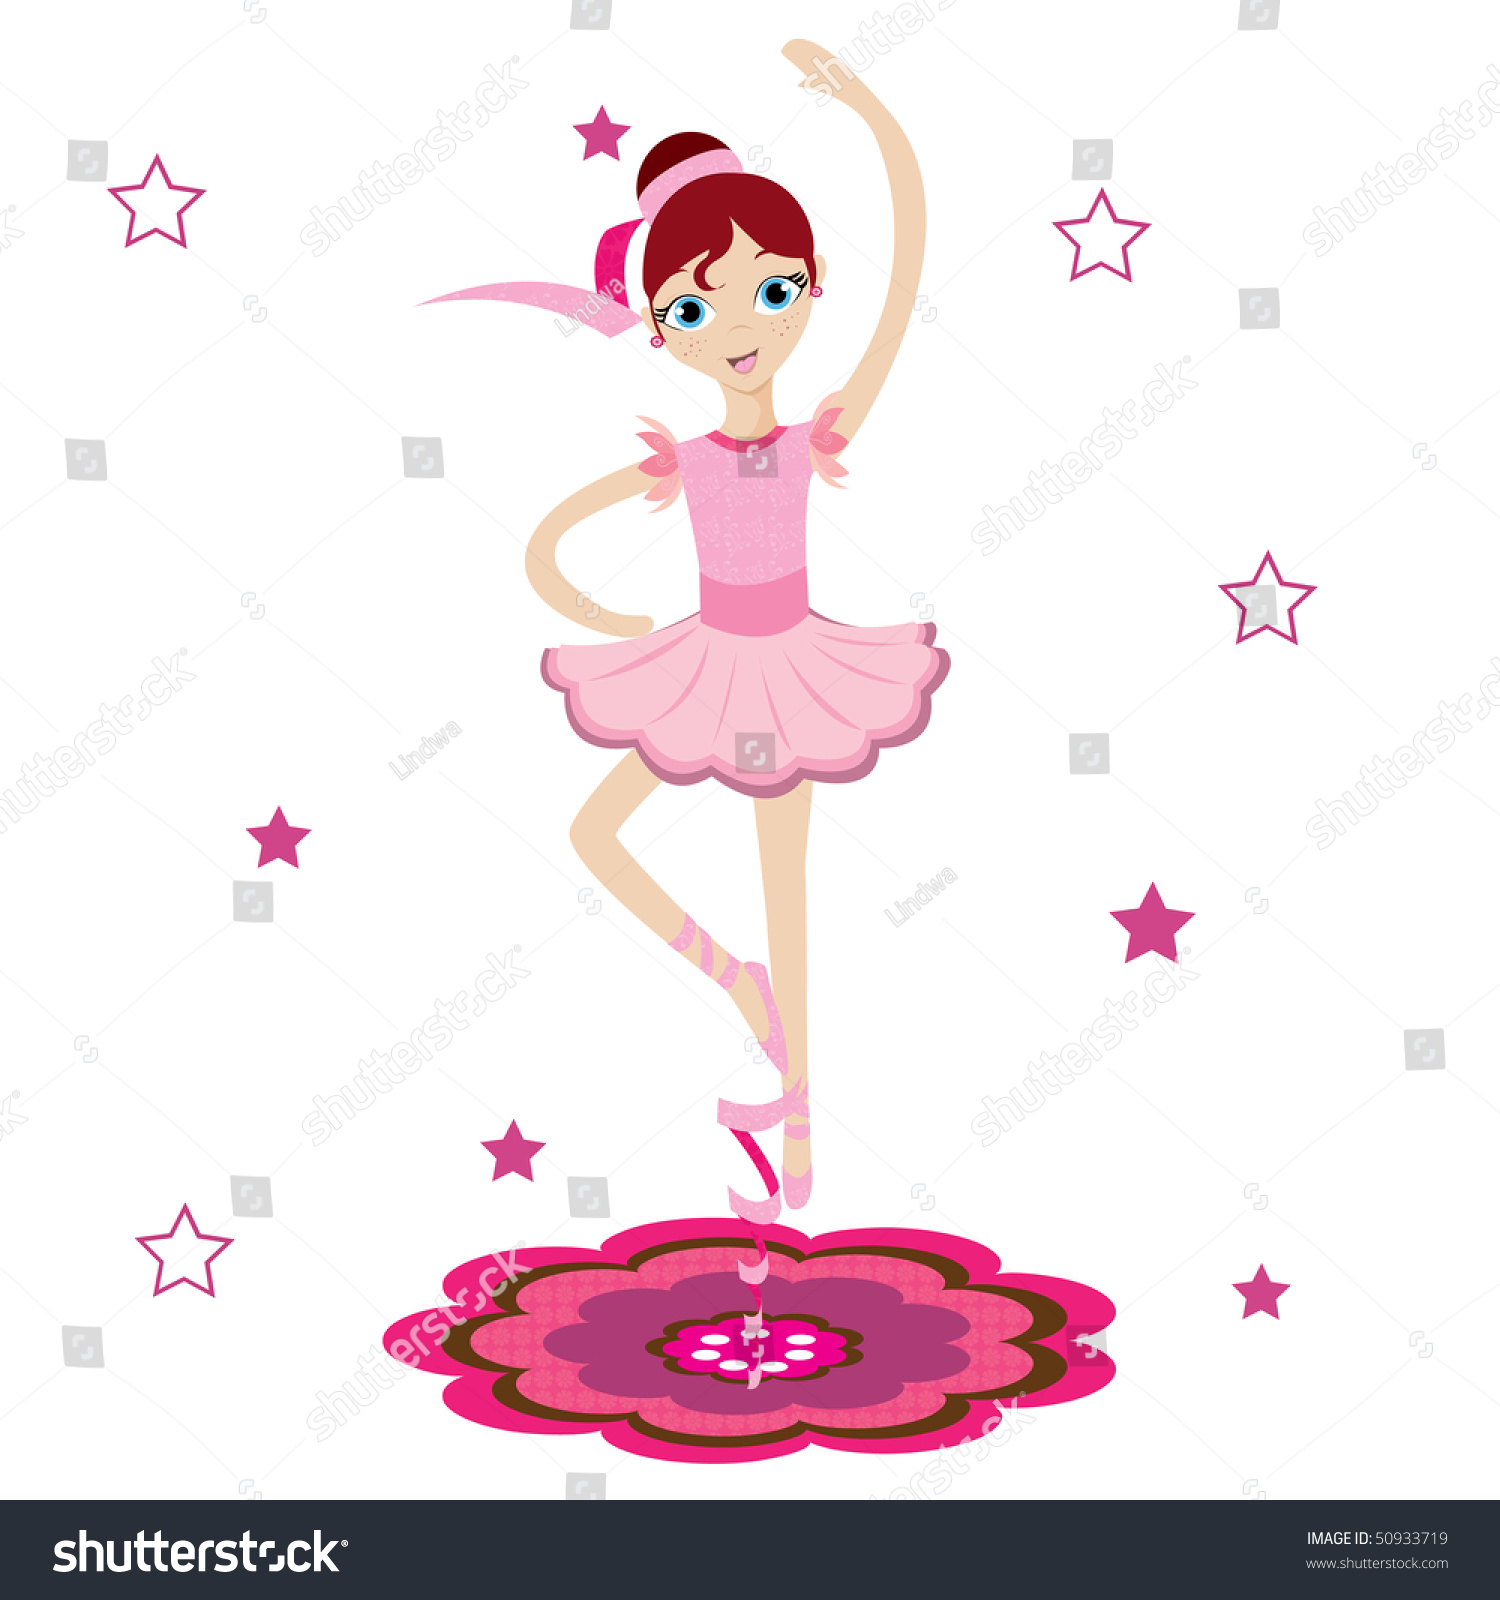 Vector Illustration Of Little Ballerina - 50933719 : Shutterstock